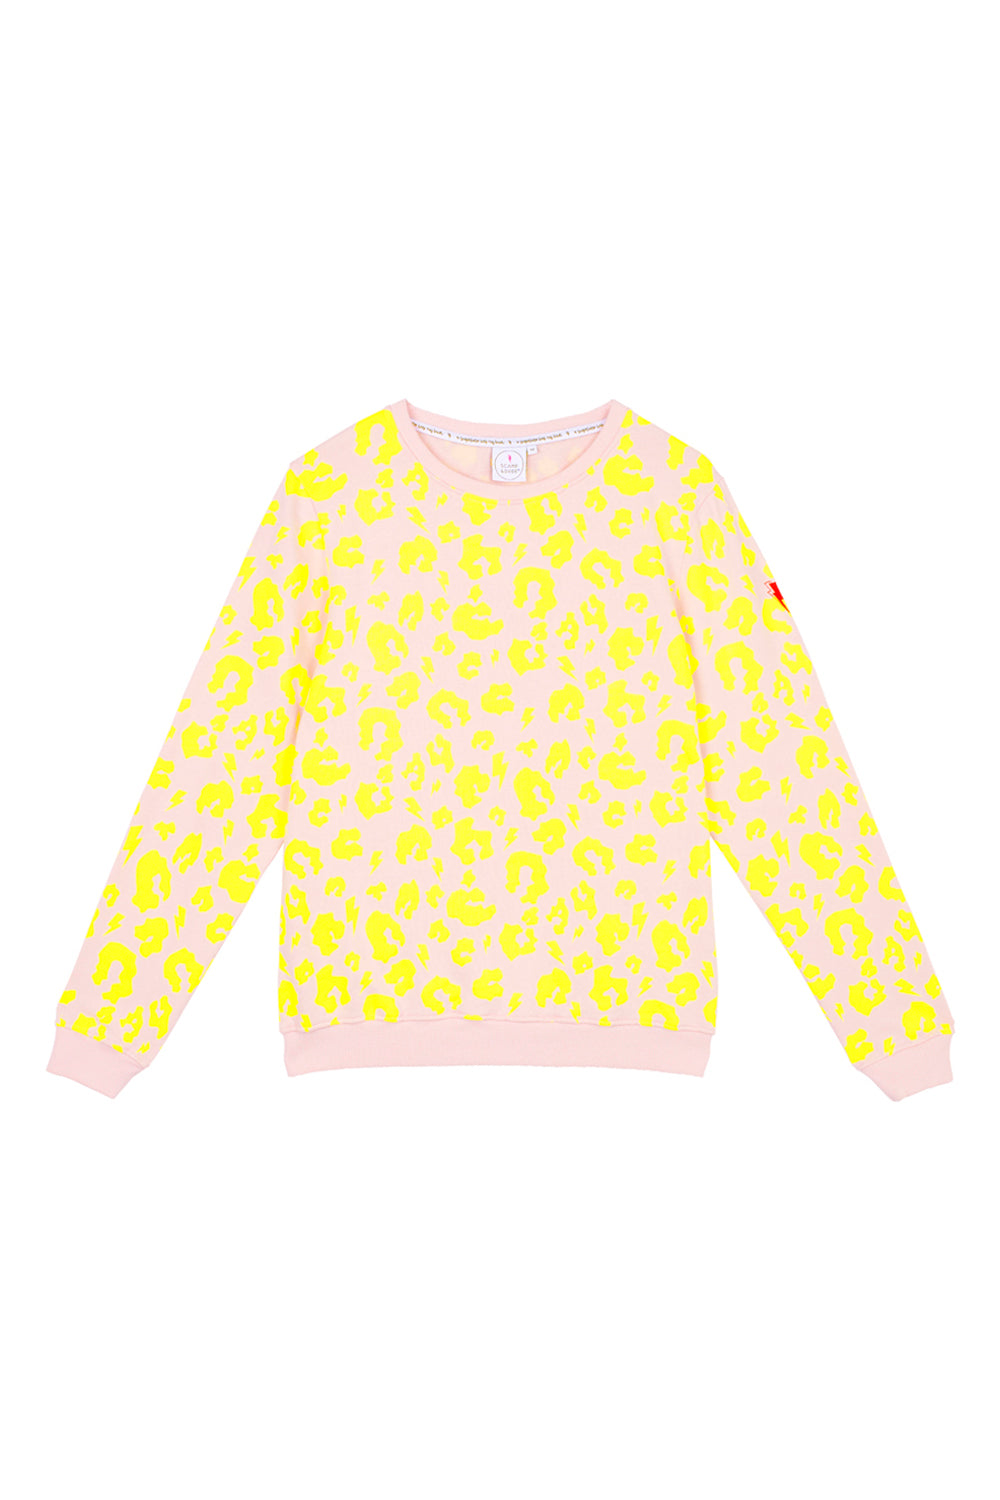 Blush with Yellow Leopard Sweatshirt